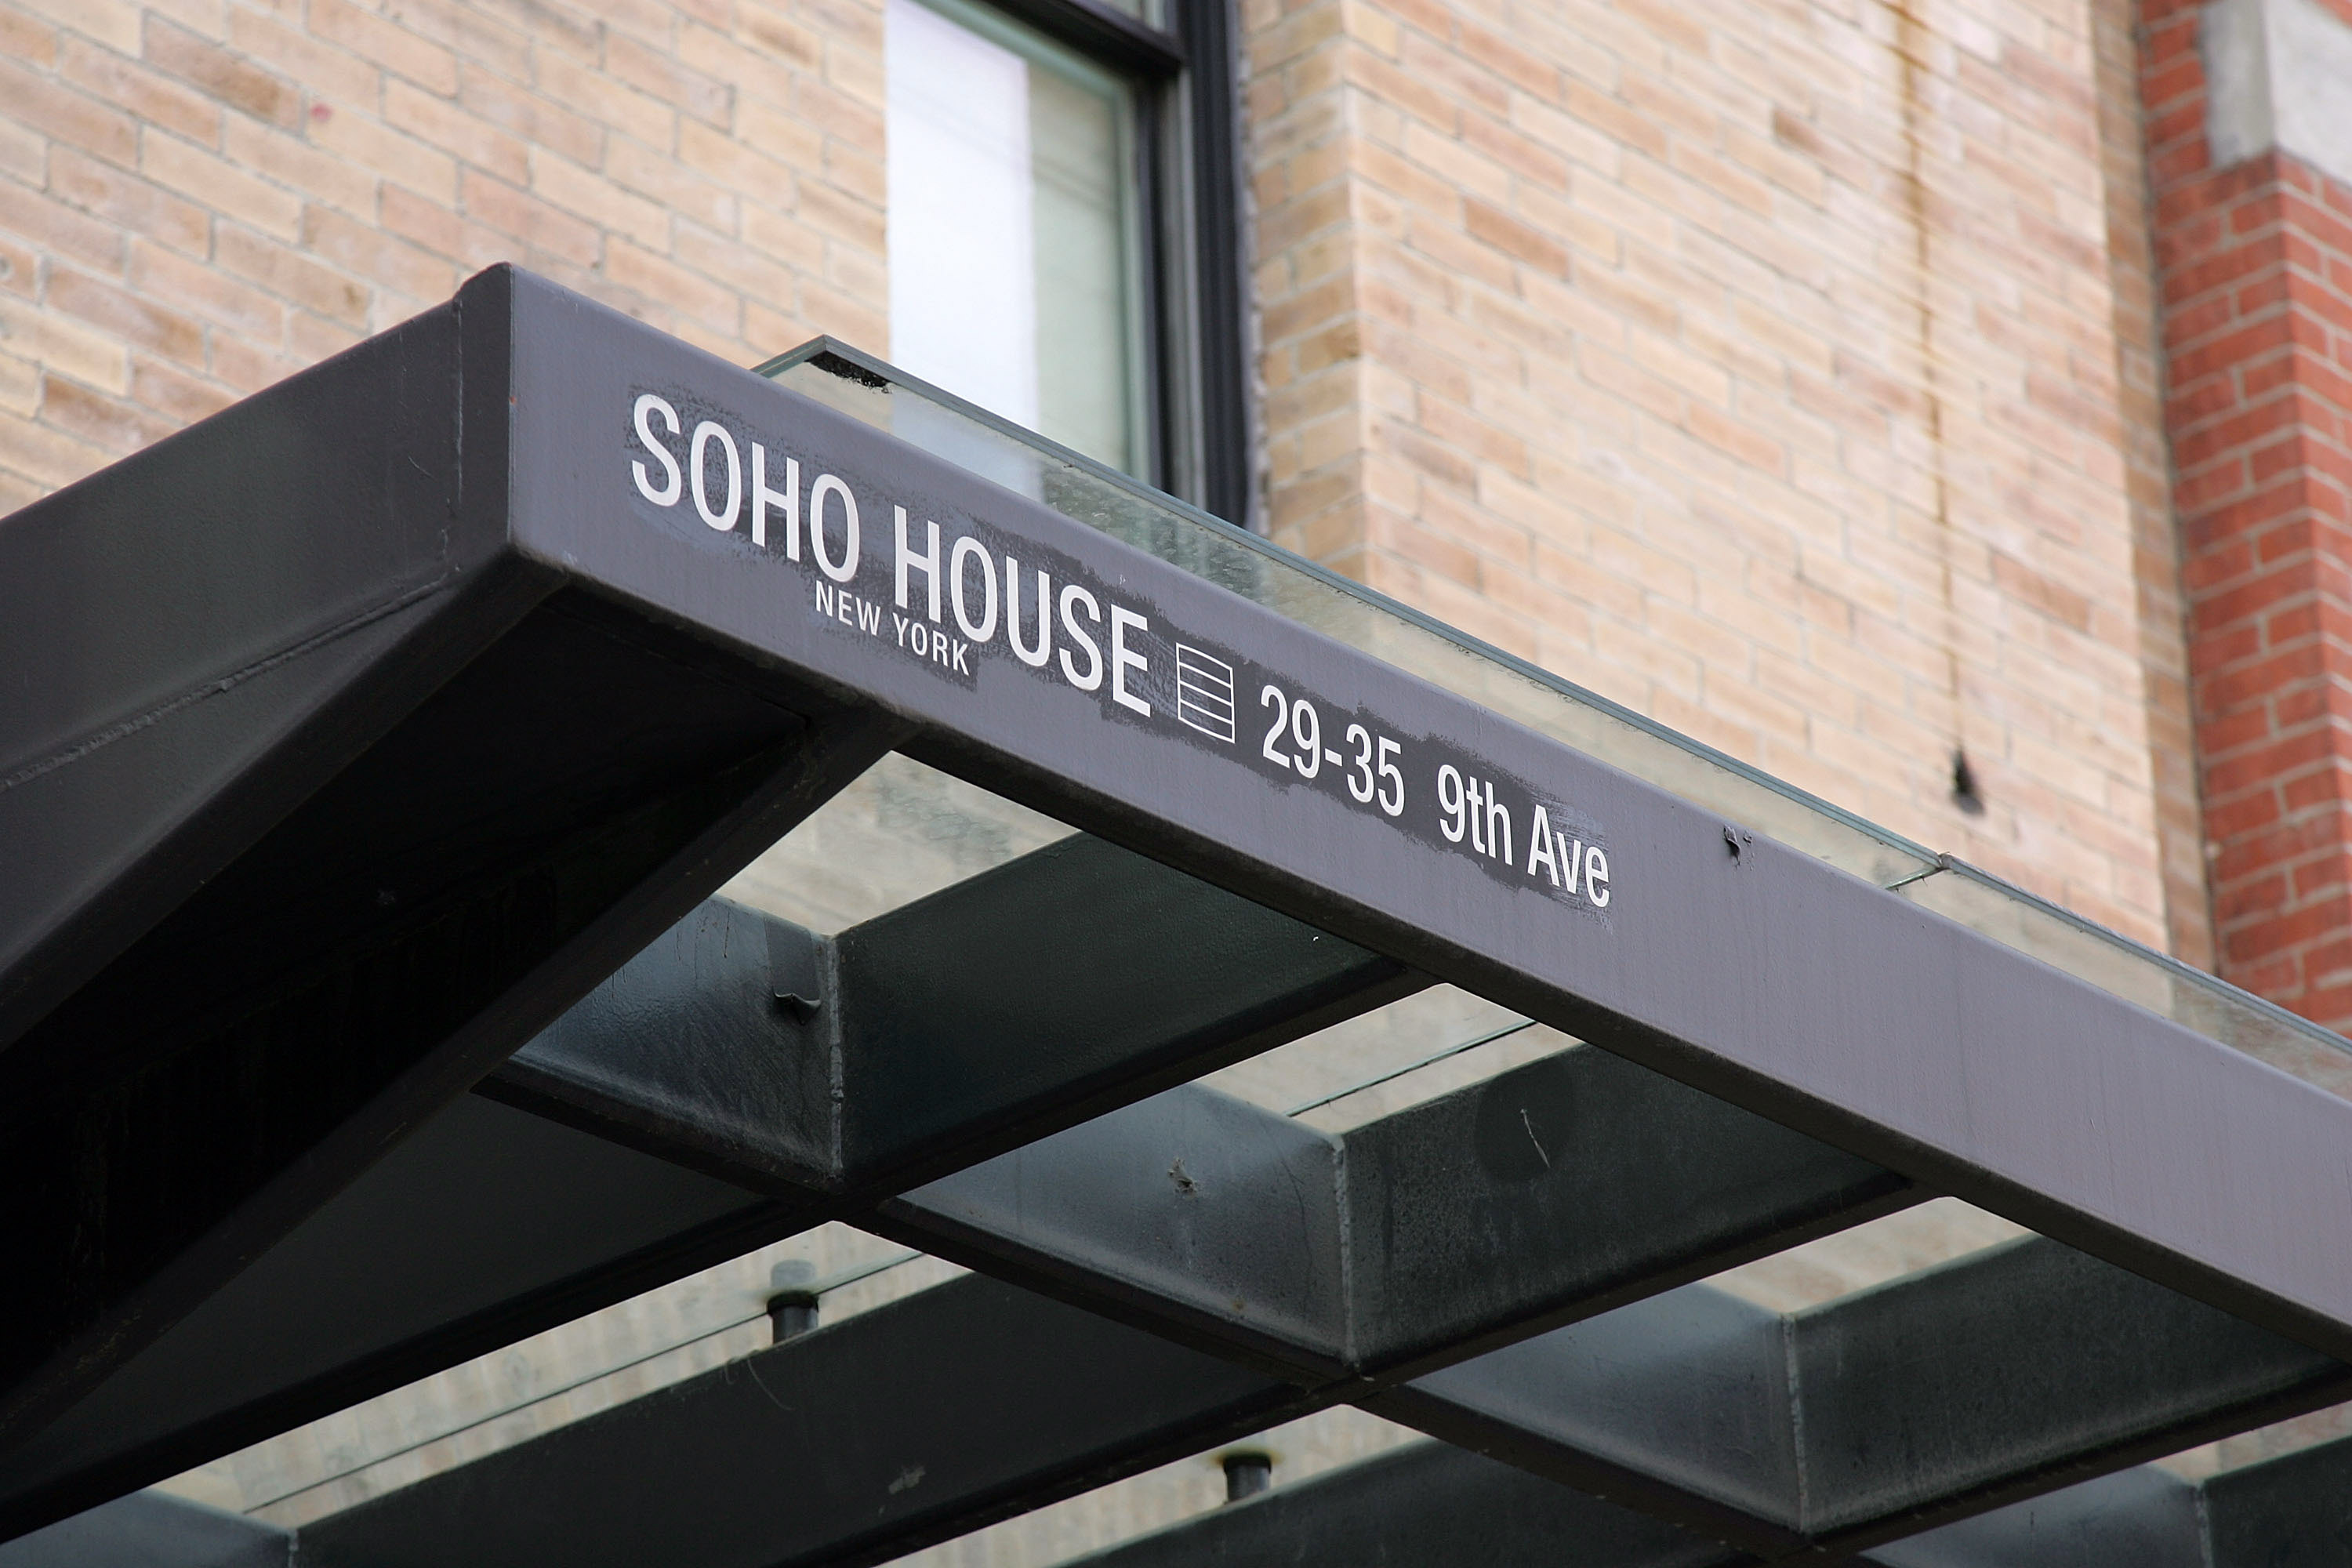 SoHo House New York 